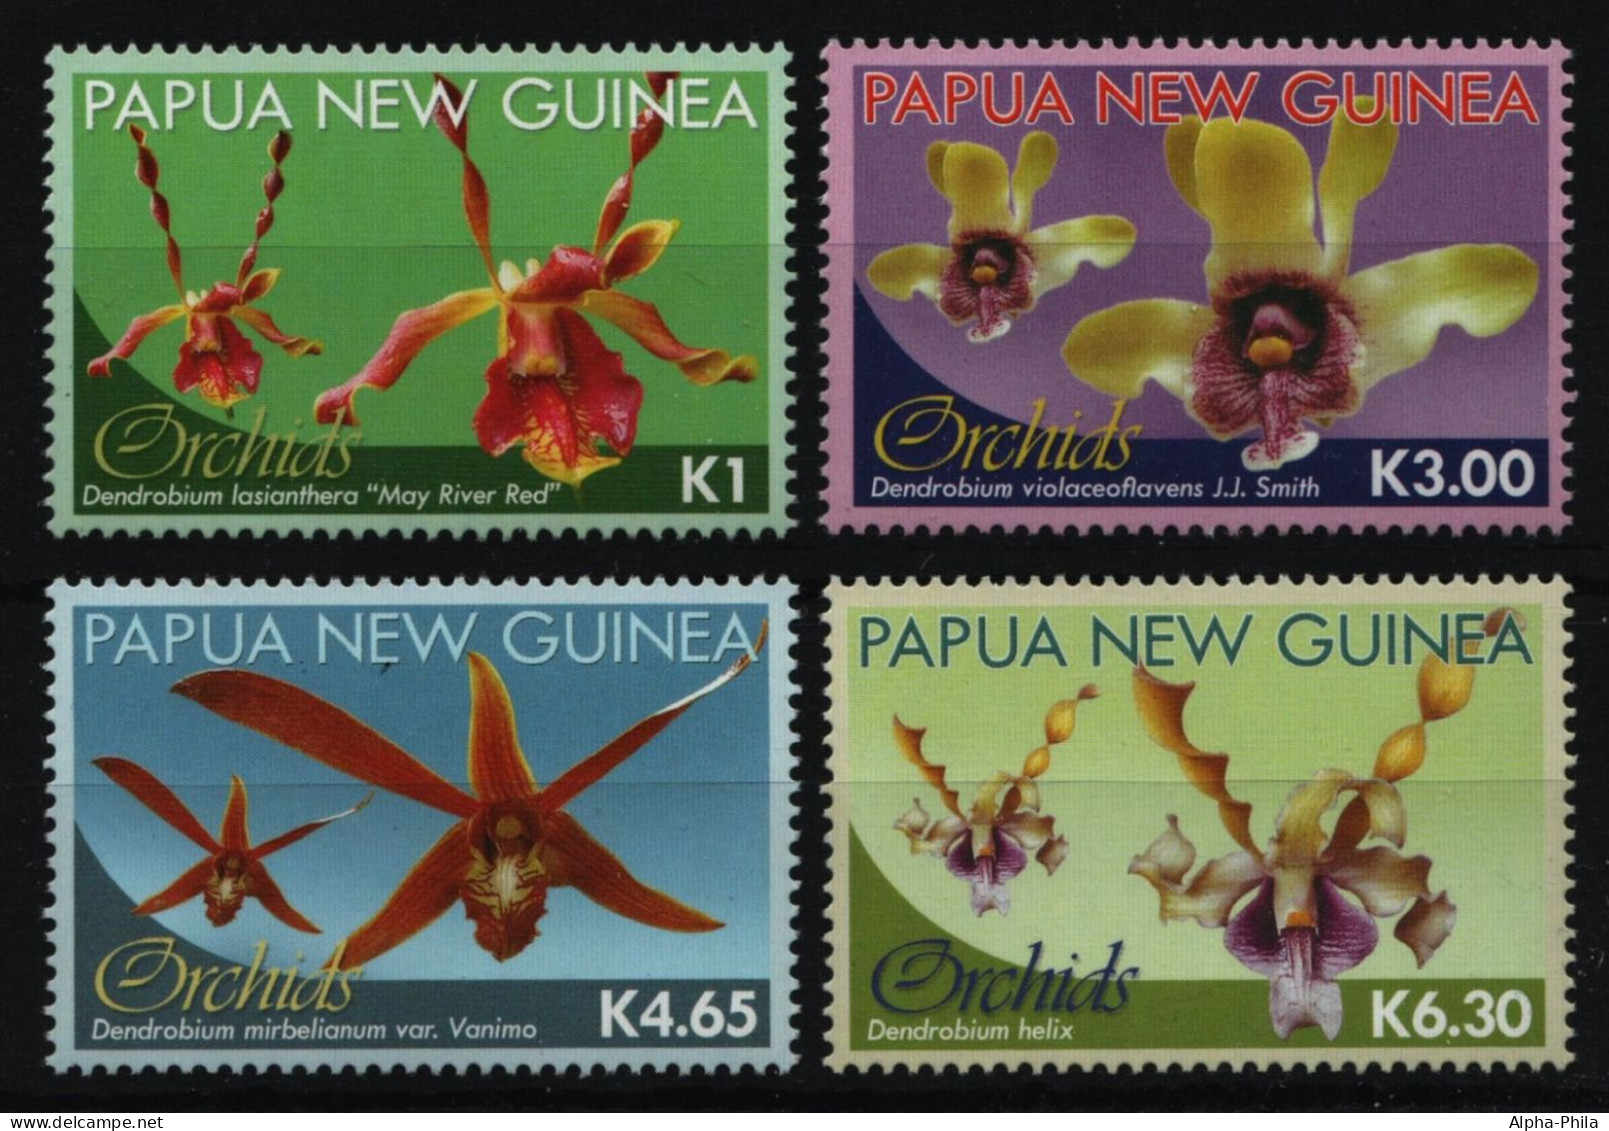 Papua-Neuguinea 2010 - Mi-Nr. 1591-1594 ** - MNH - Orchideen / Orchids - Papua-Neuguinea